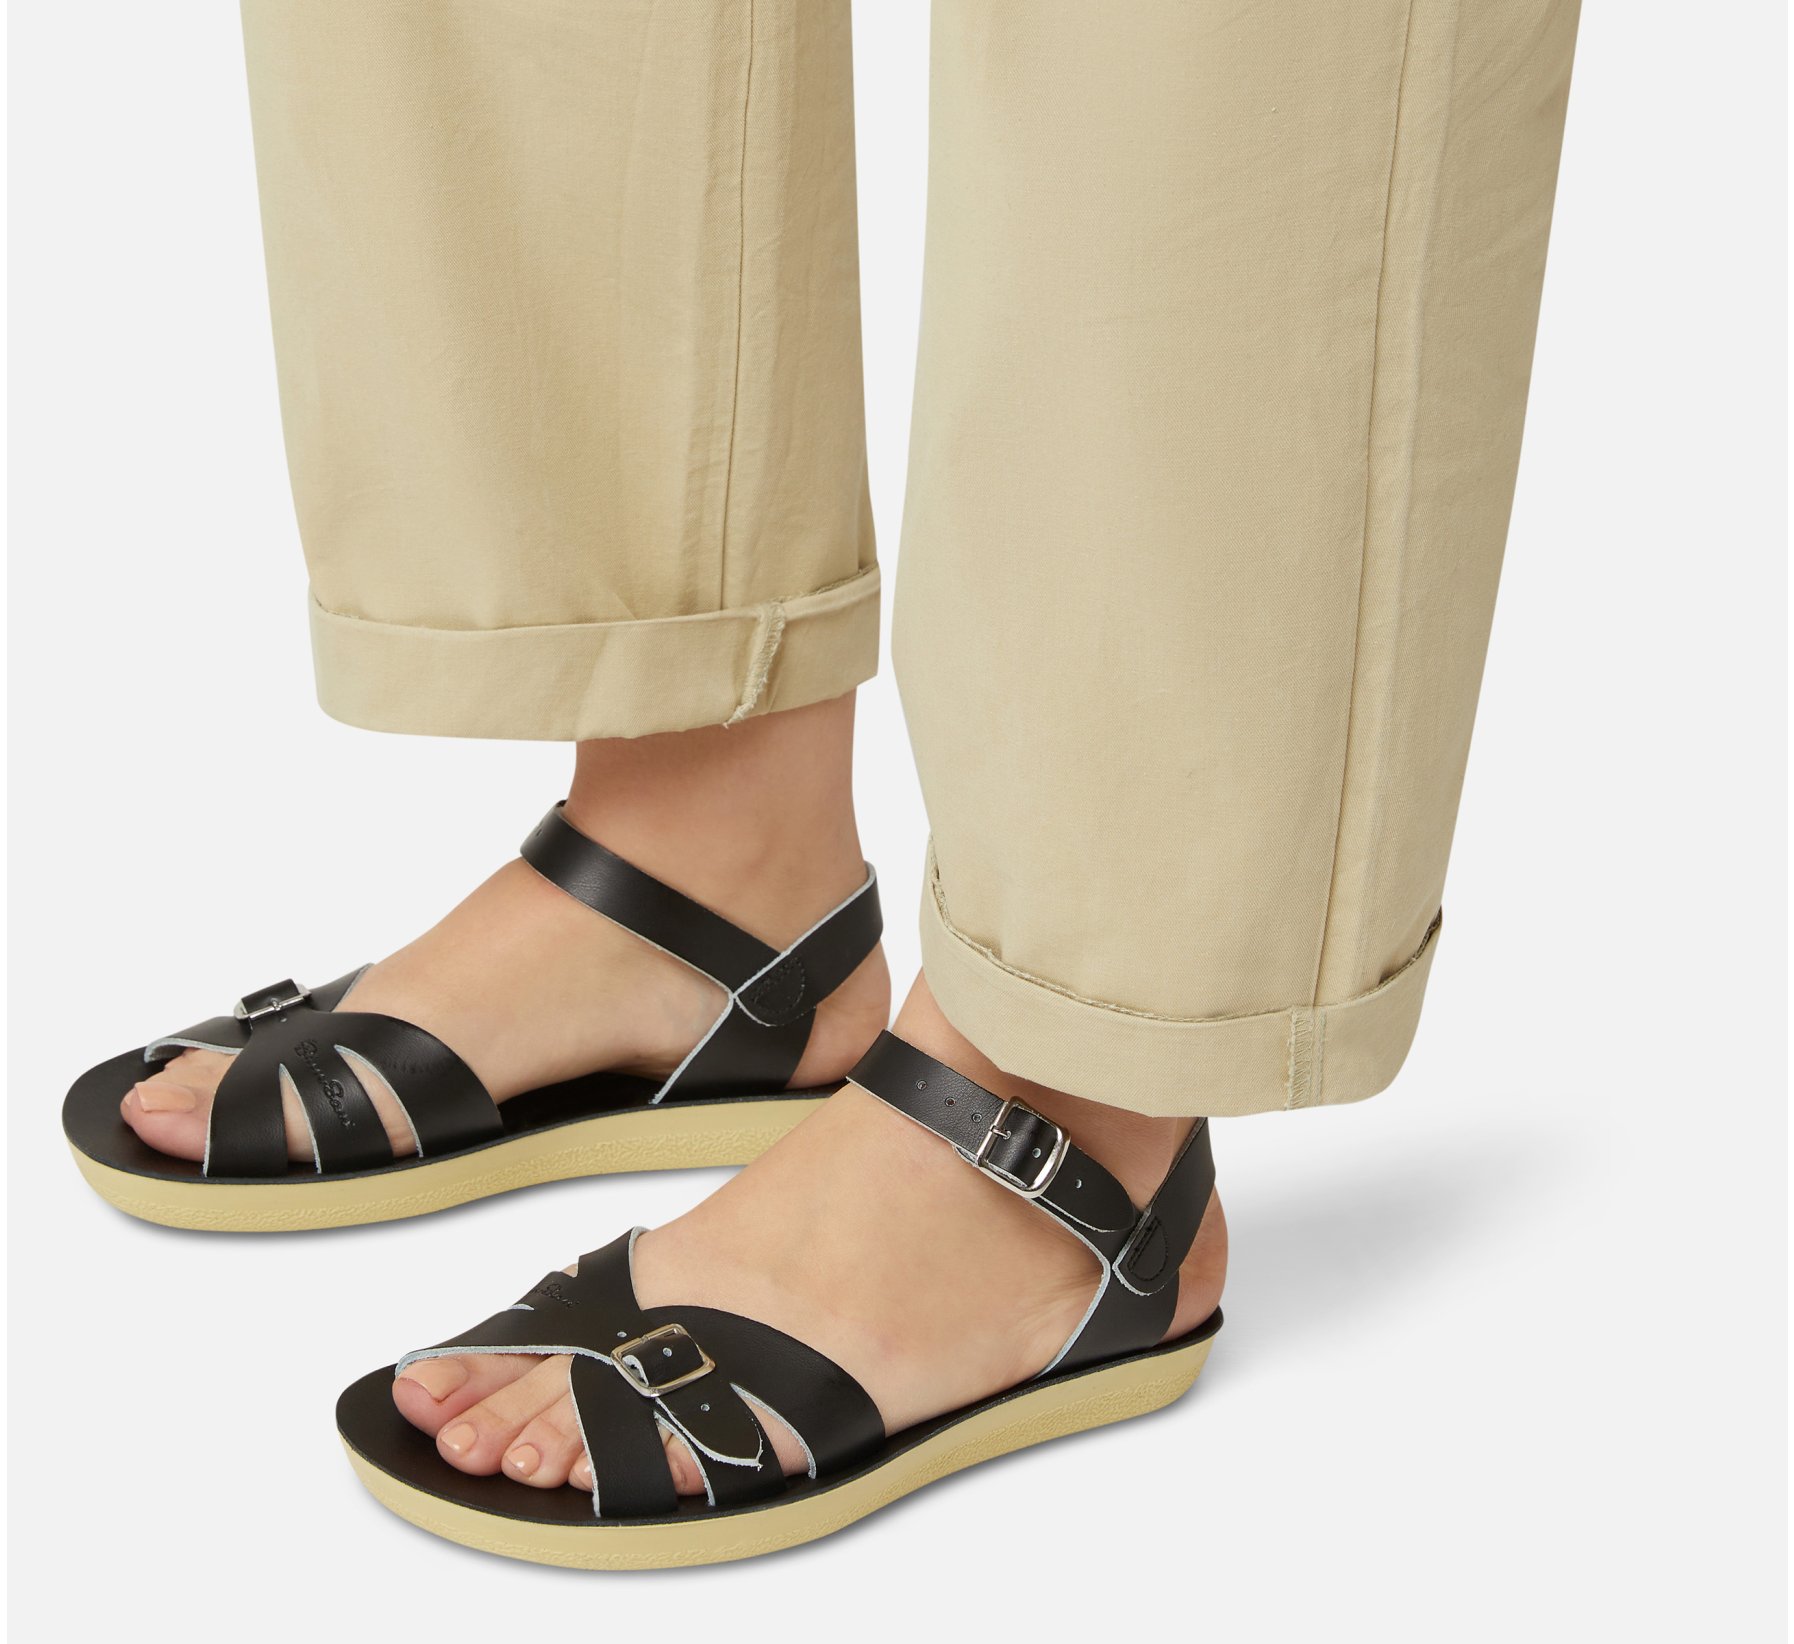 Boardwalk Femmes Sandales Noire - Salt Water Sandals